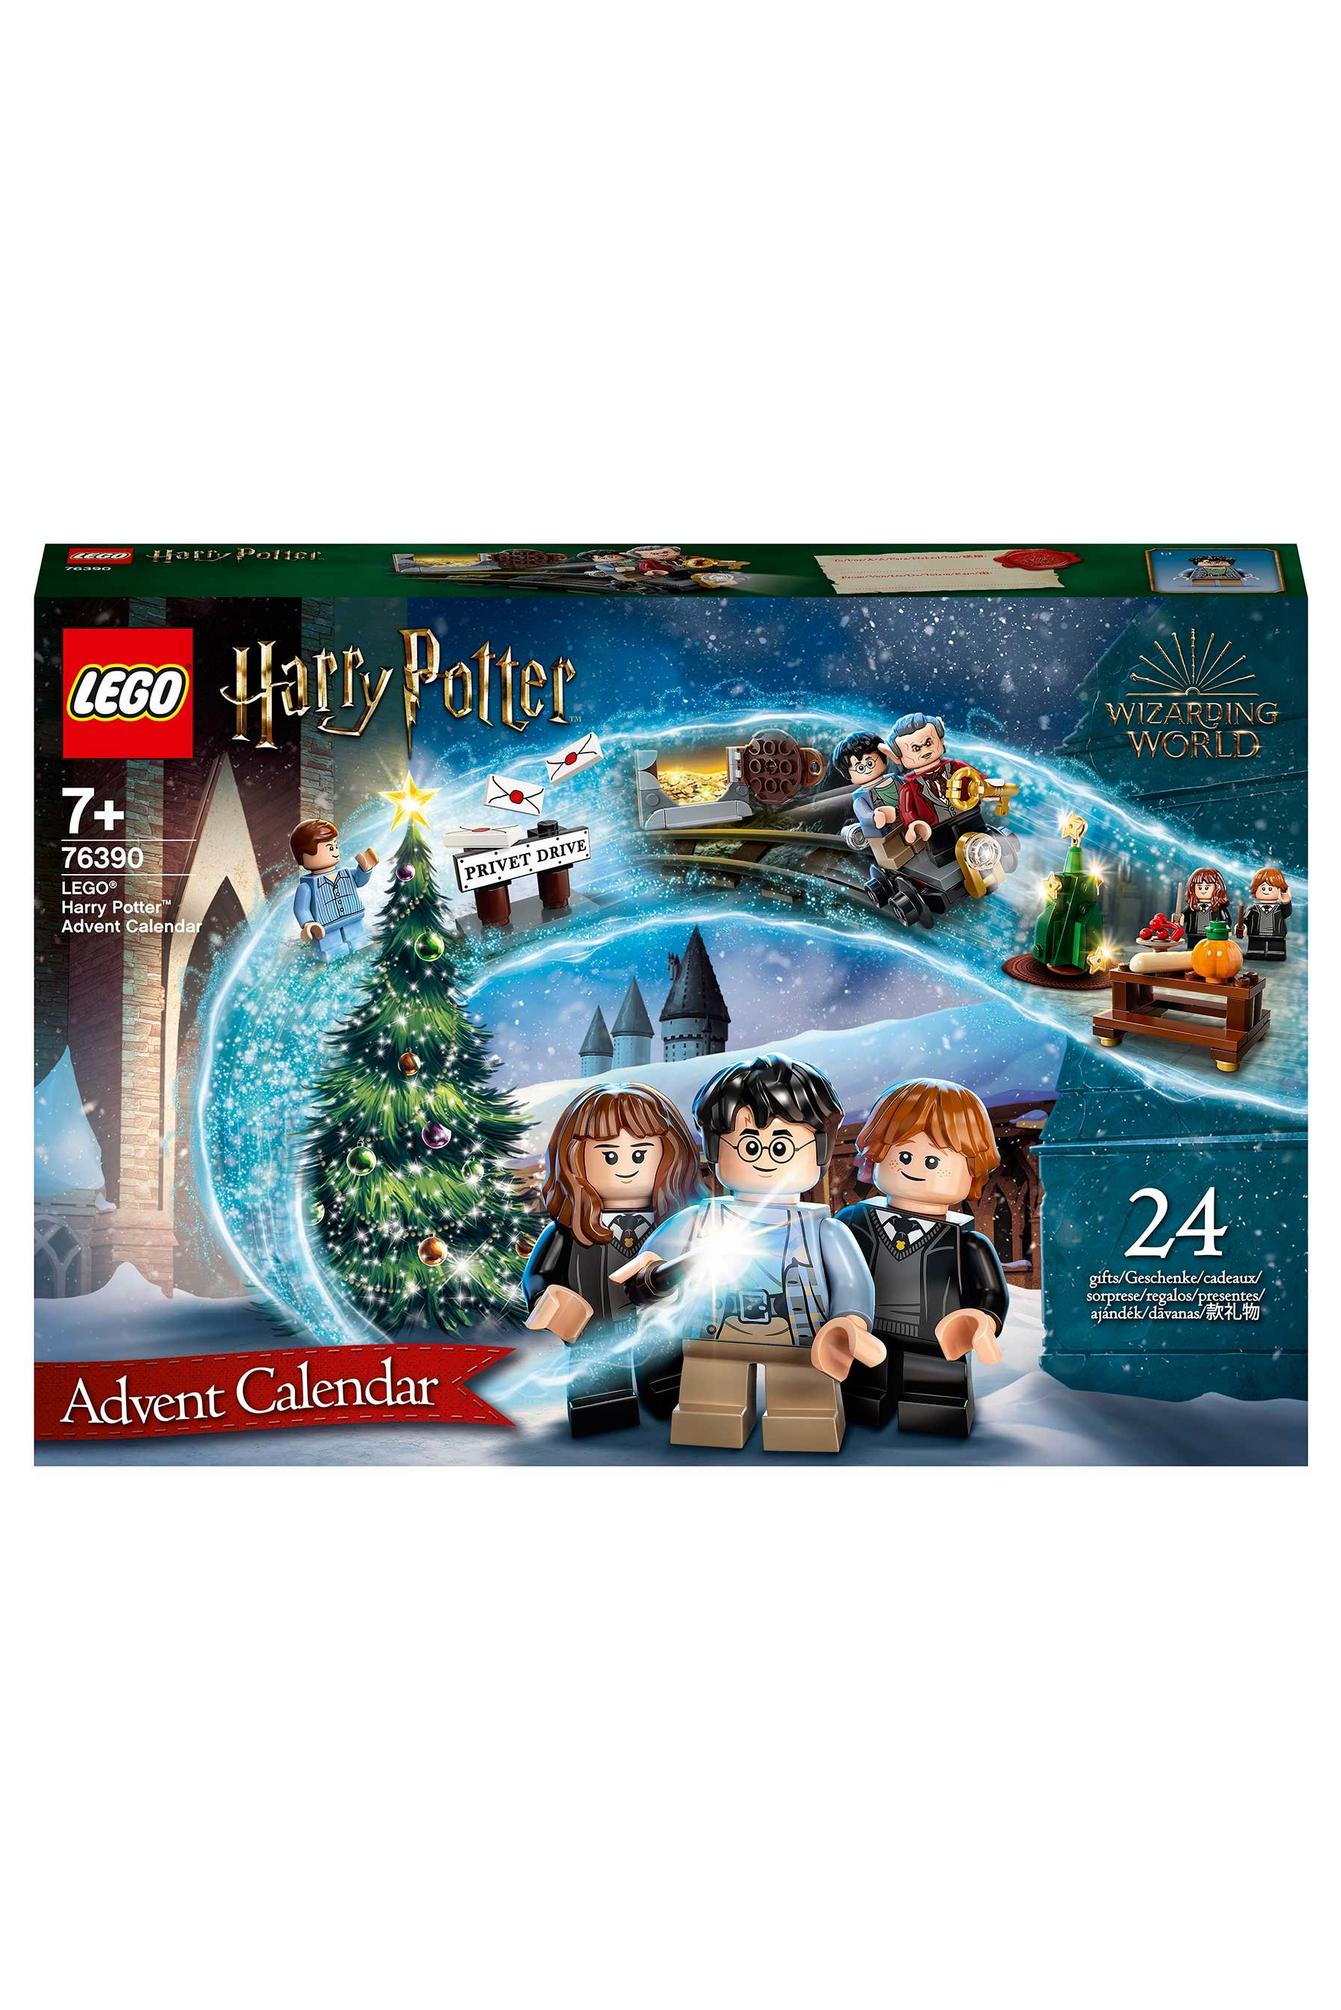 Harry Potter Lego advent calendar